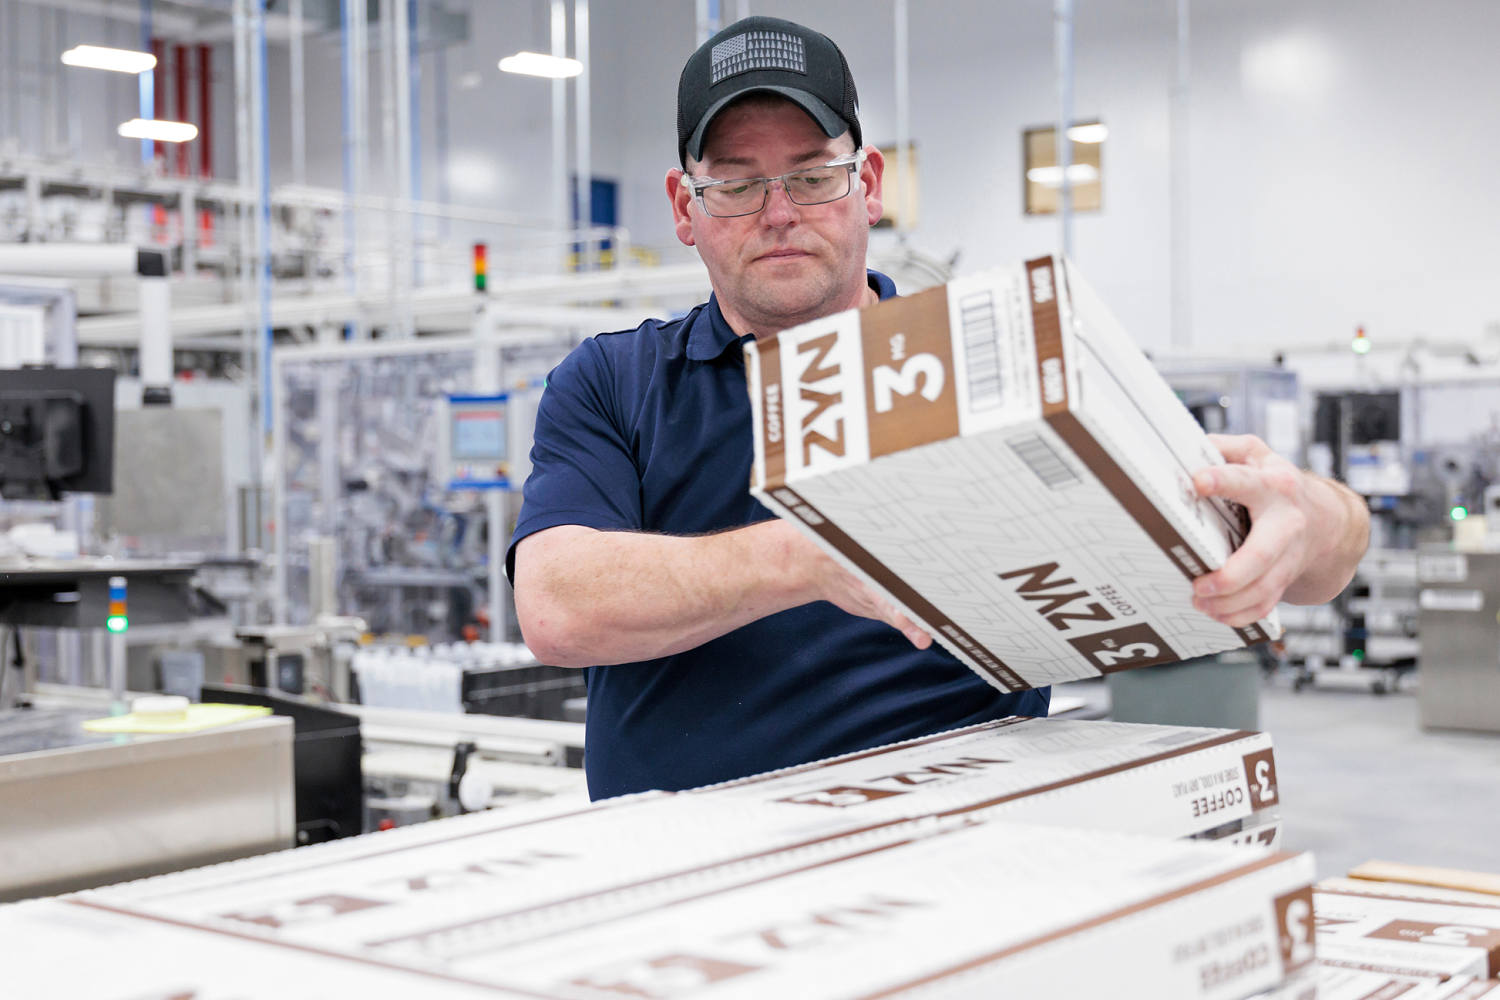 Zyn-maker Philip Morris announces new $600 million production facility in Colorado